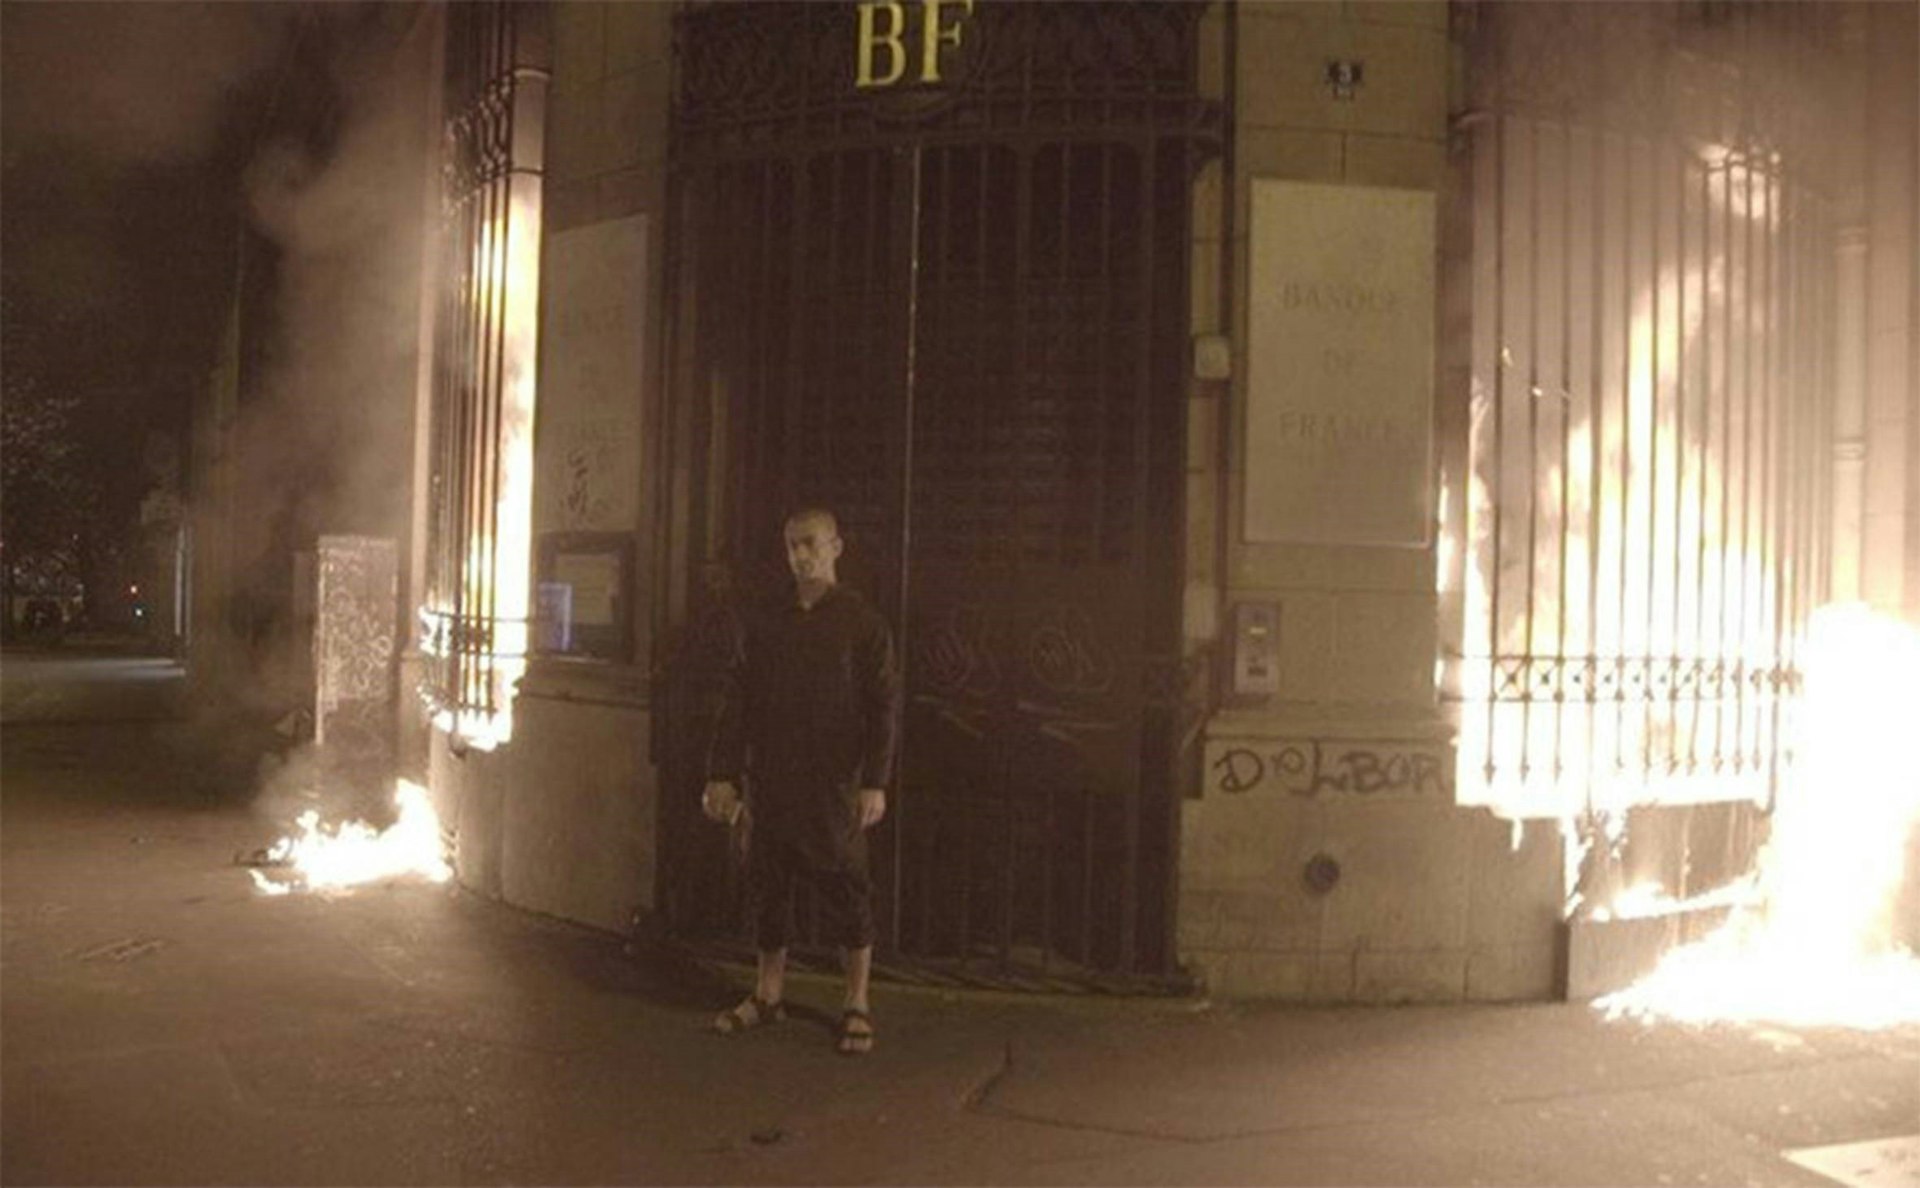 Petr Pavlensky in front of the Banque De France